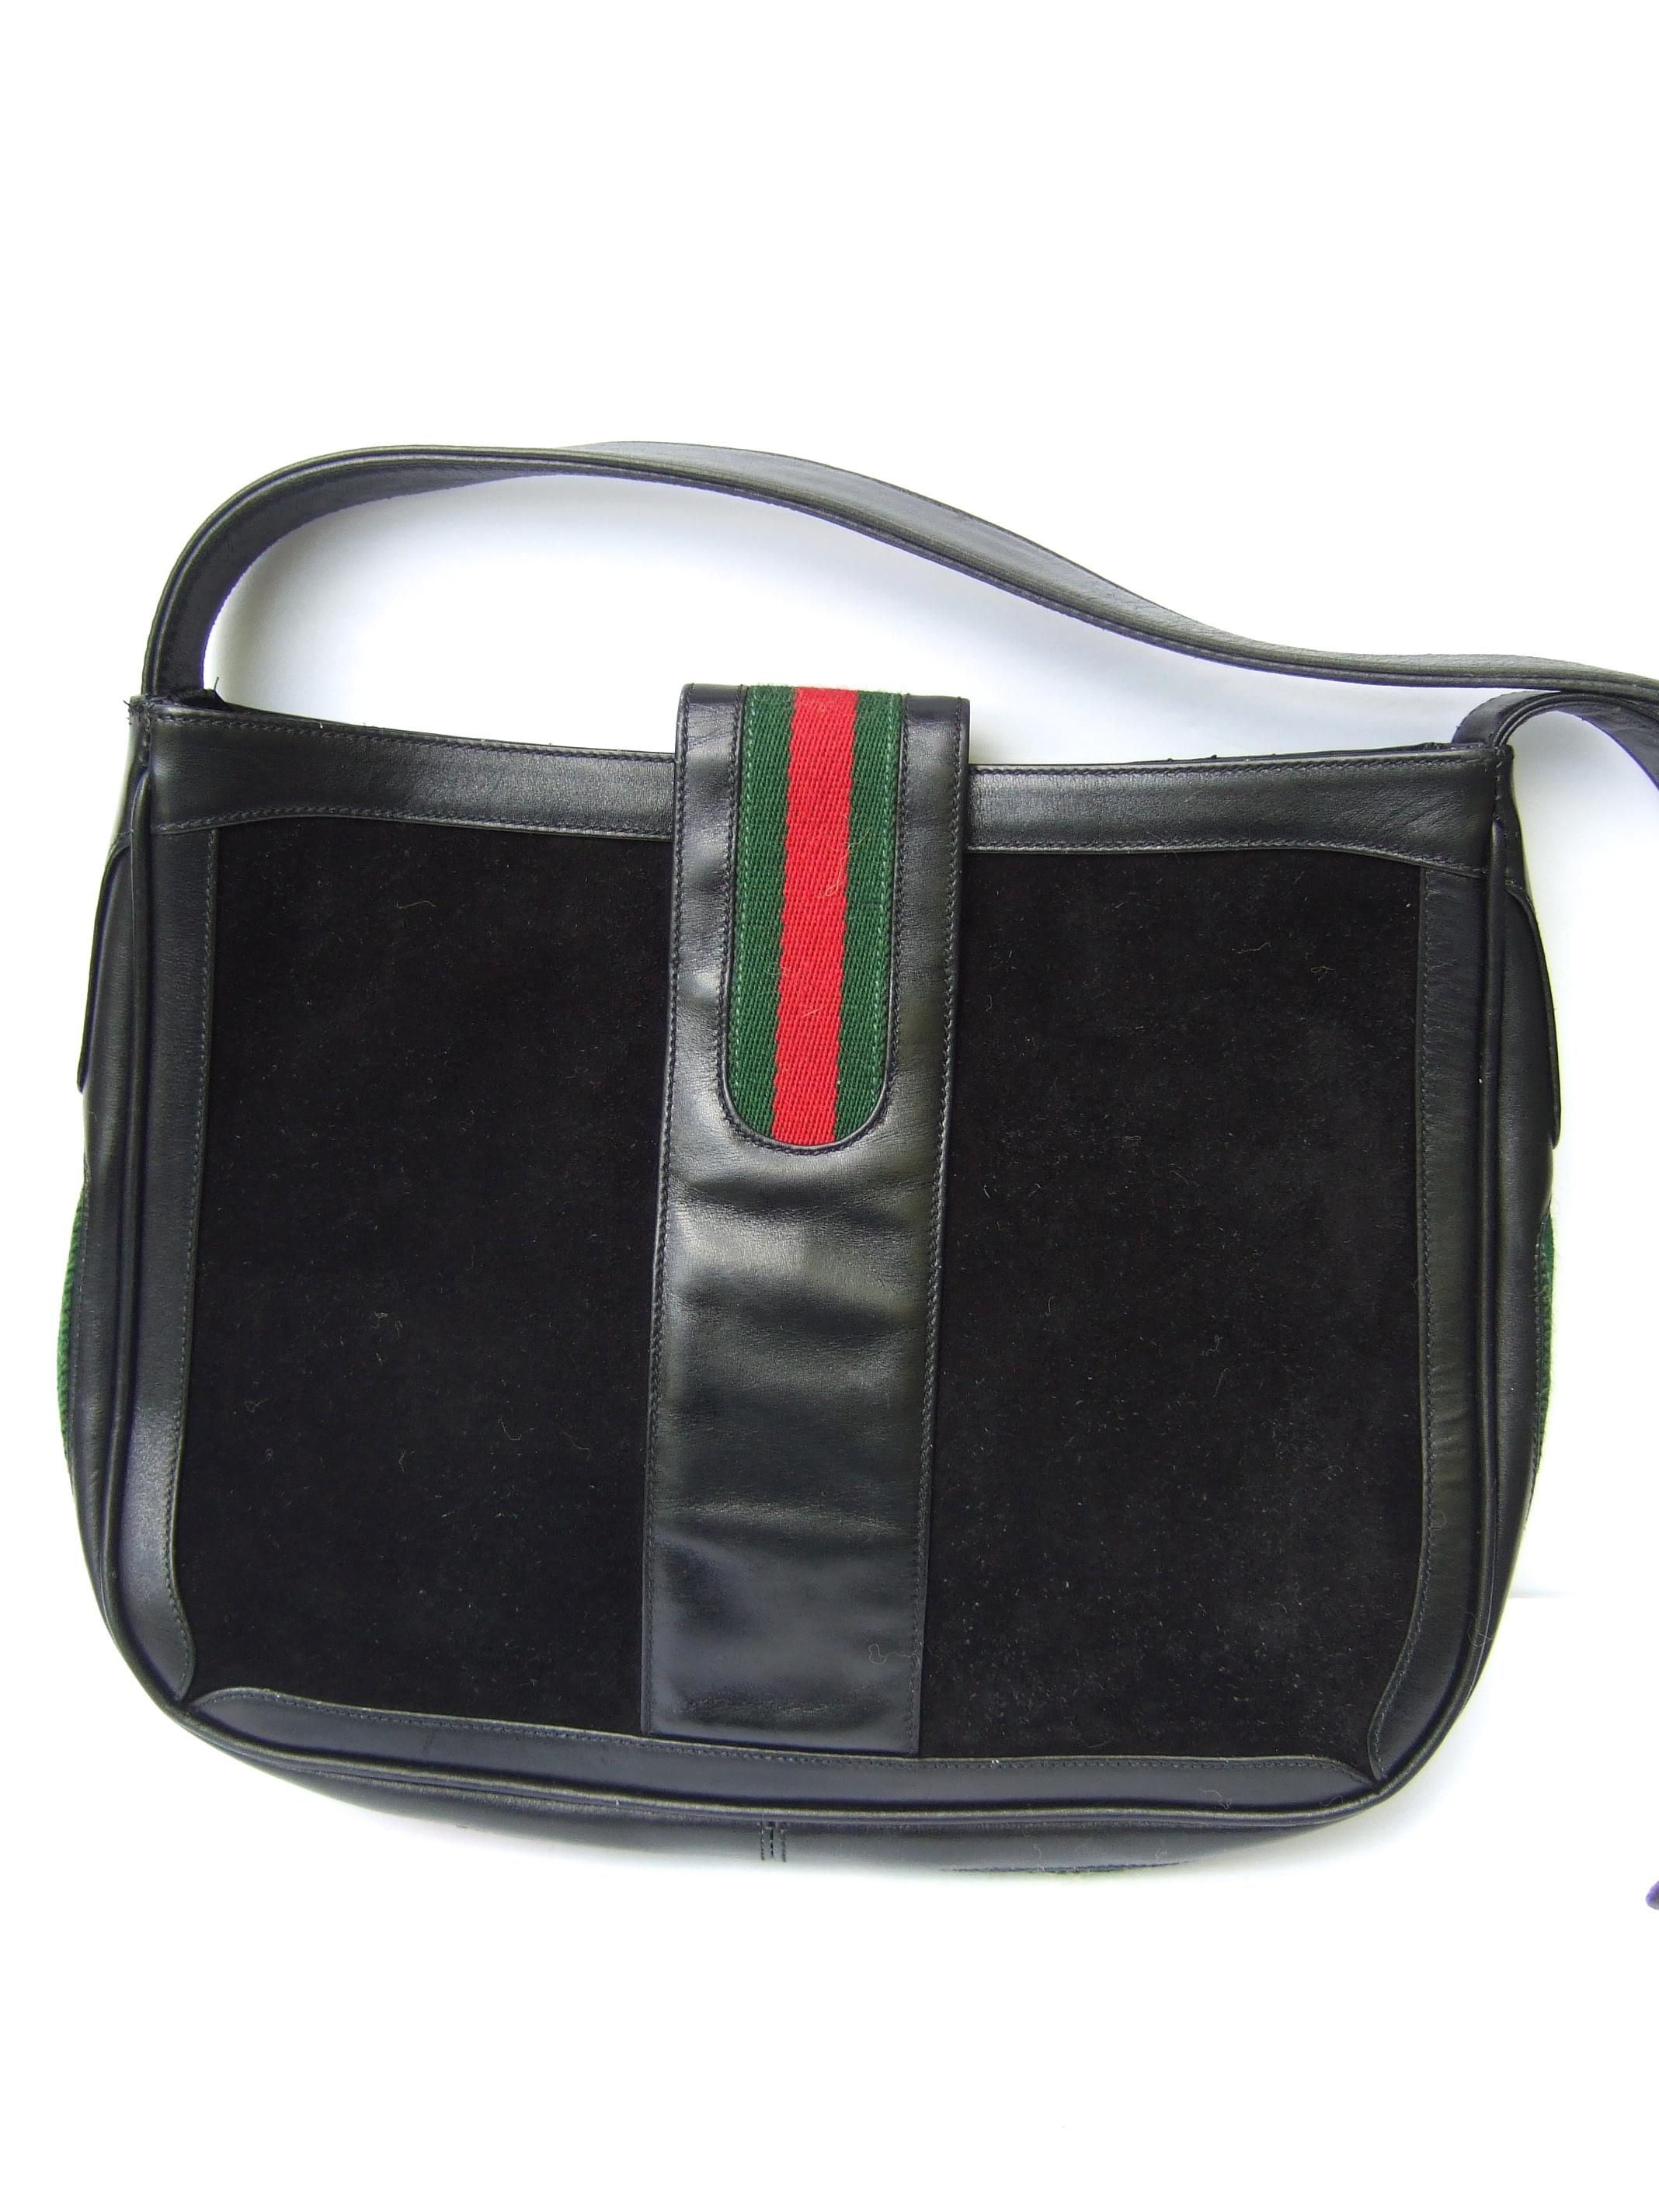 Gucci Italy Rare Black Suede Boot Emblem Shoulder Bag c 1970s For Sale 6